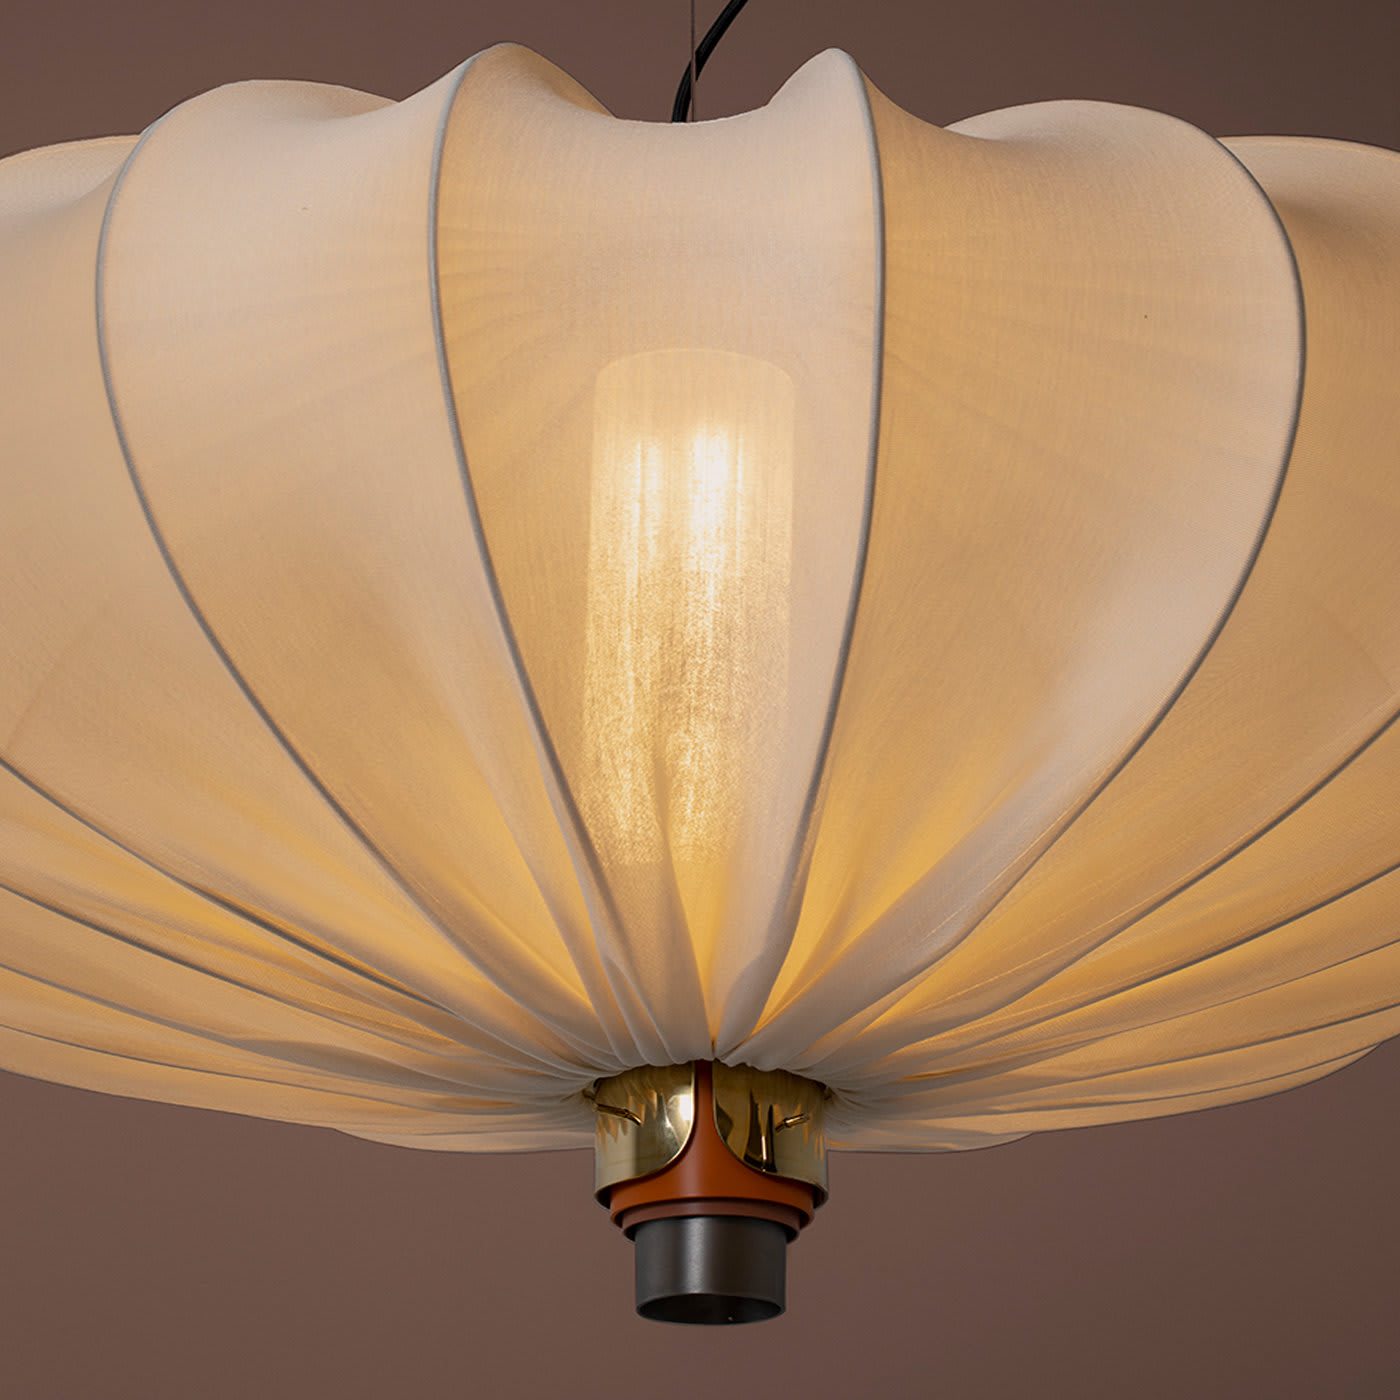 A Pendant Lamp #2 by Dimoremilano Dimorestudio